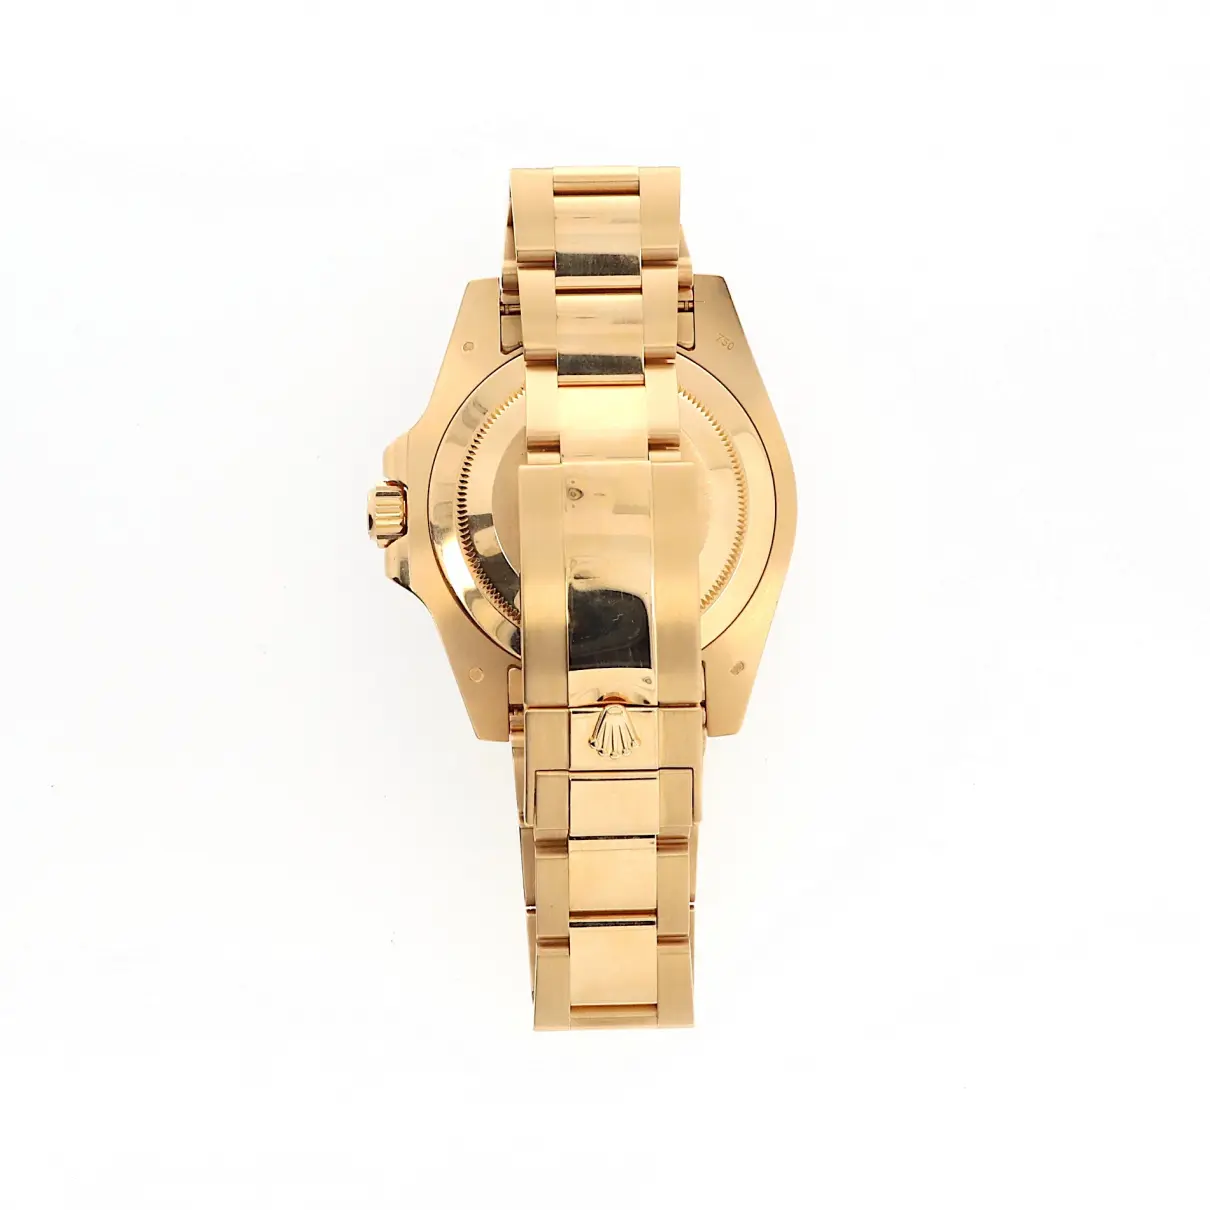 Buy Rolex GMT-Master II yellow gold watch online